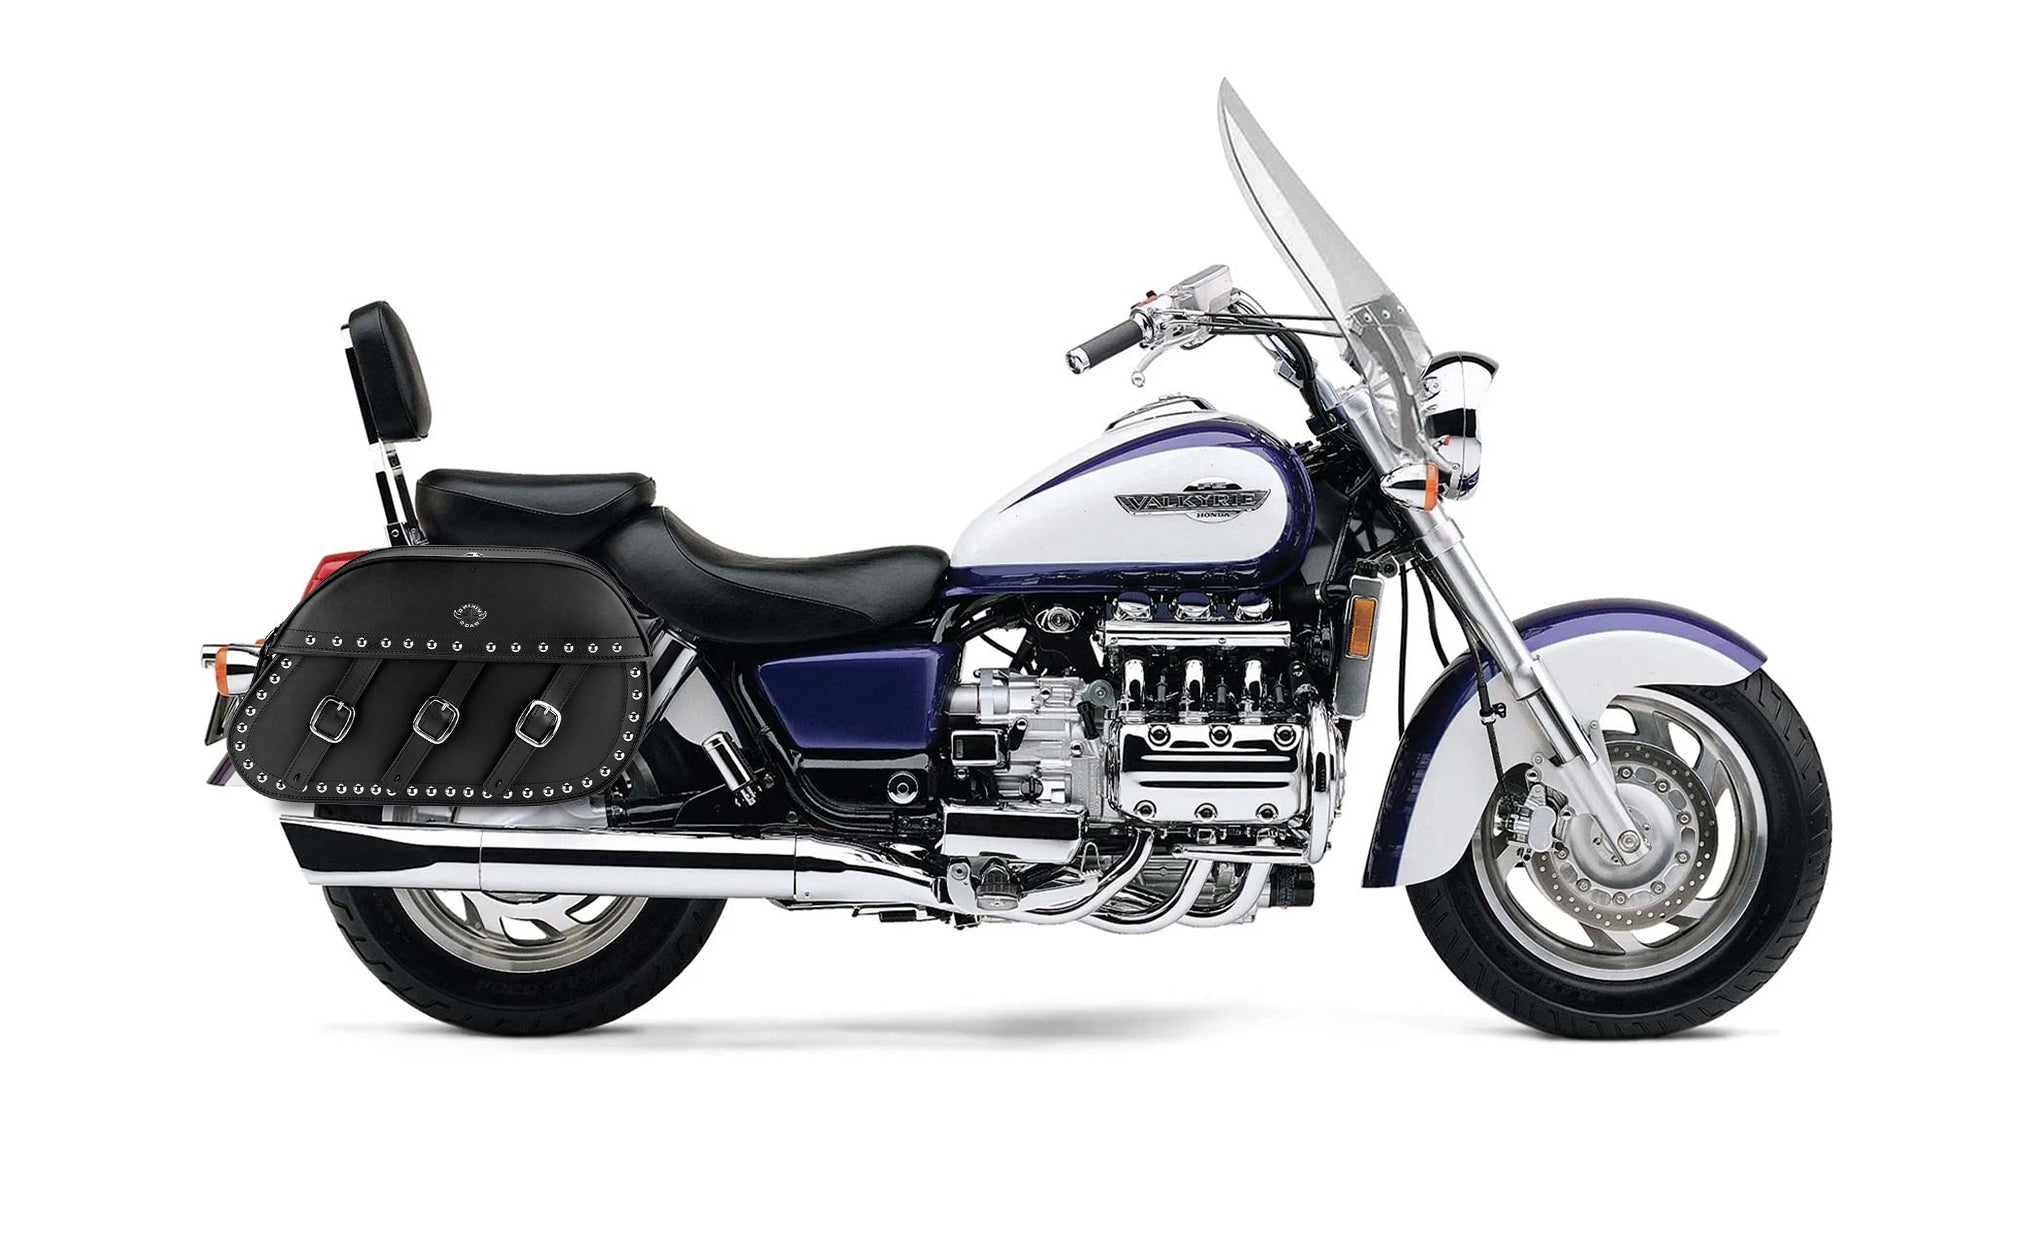 34L - Trianon Extra Large Honda Valkyrie 1500 Tourer Studded Leather Motorcycle Saddlebags on Bike Photo @expand